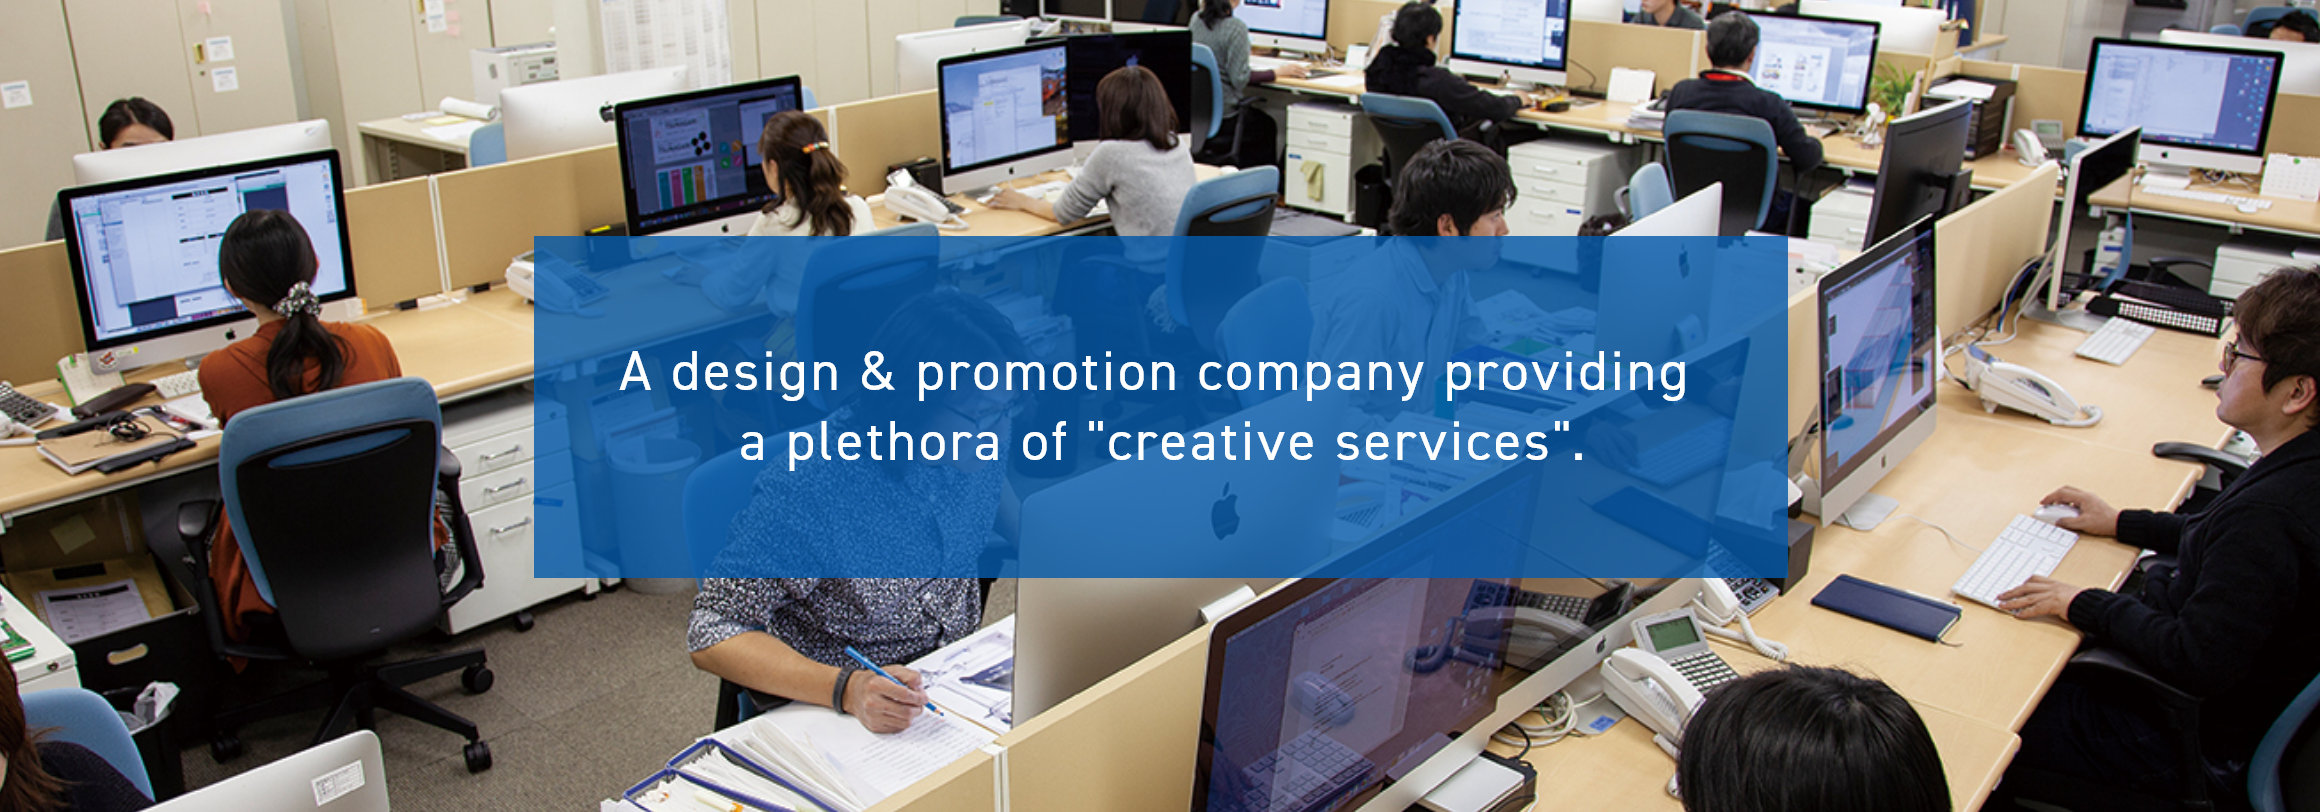 A design & promotion company providing a plethora of "creative services".